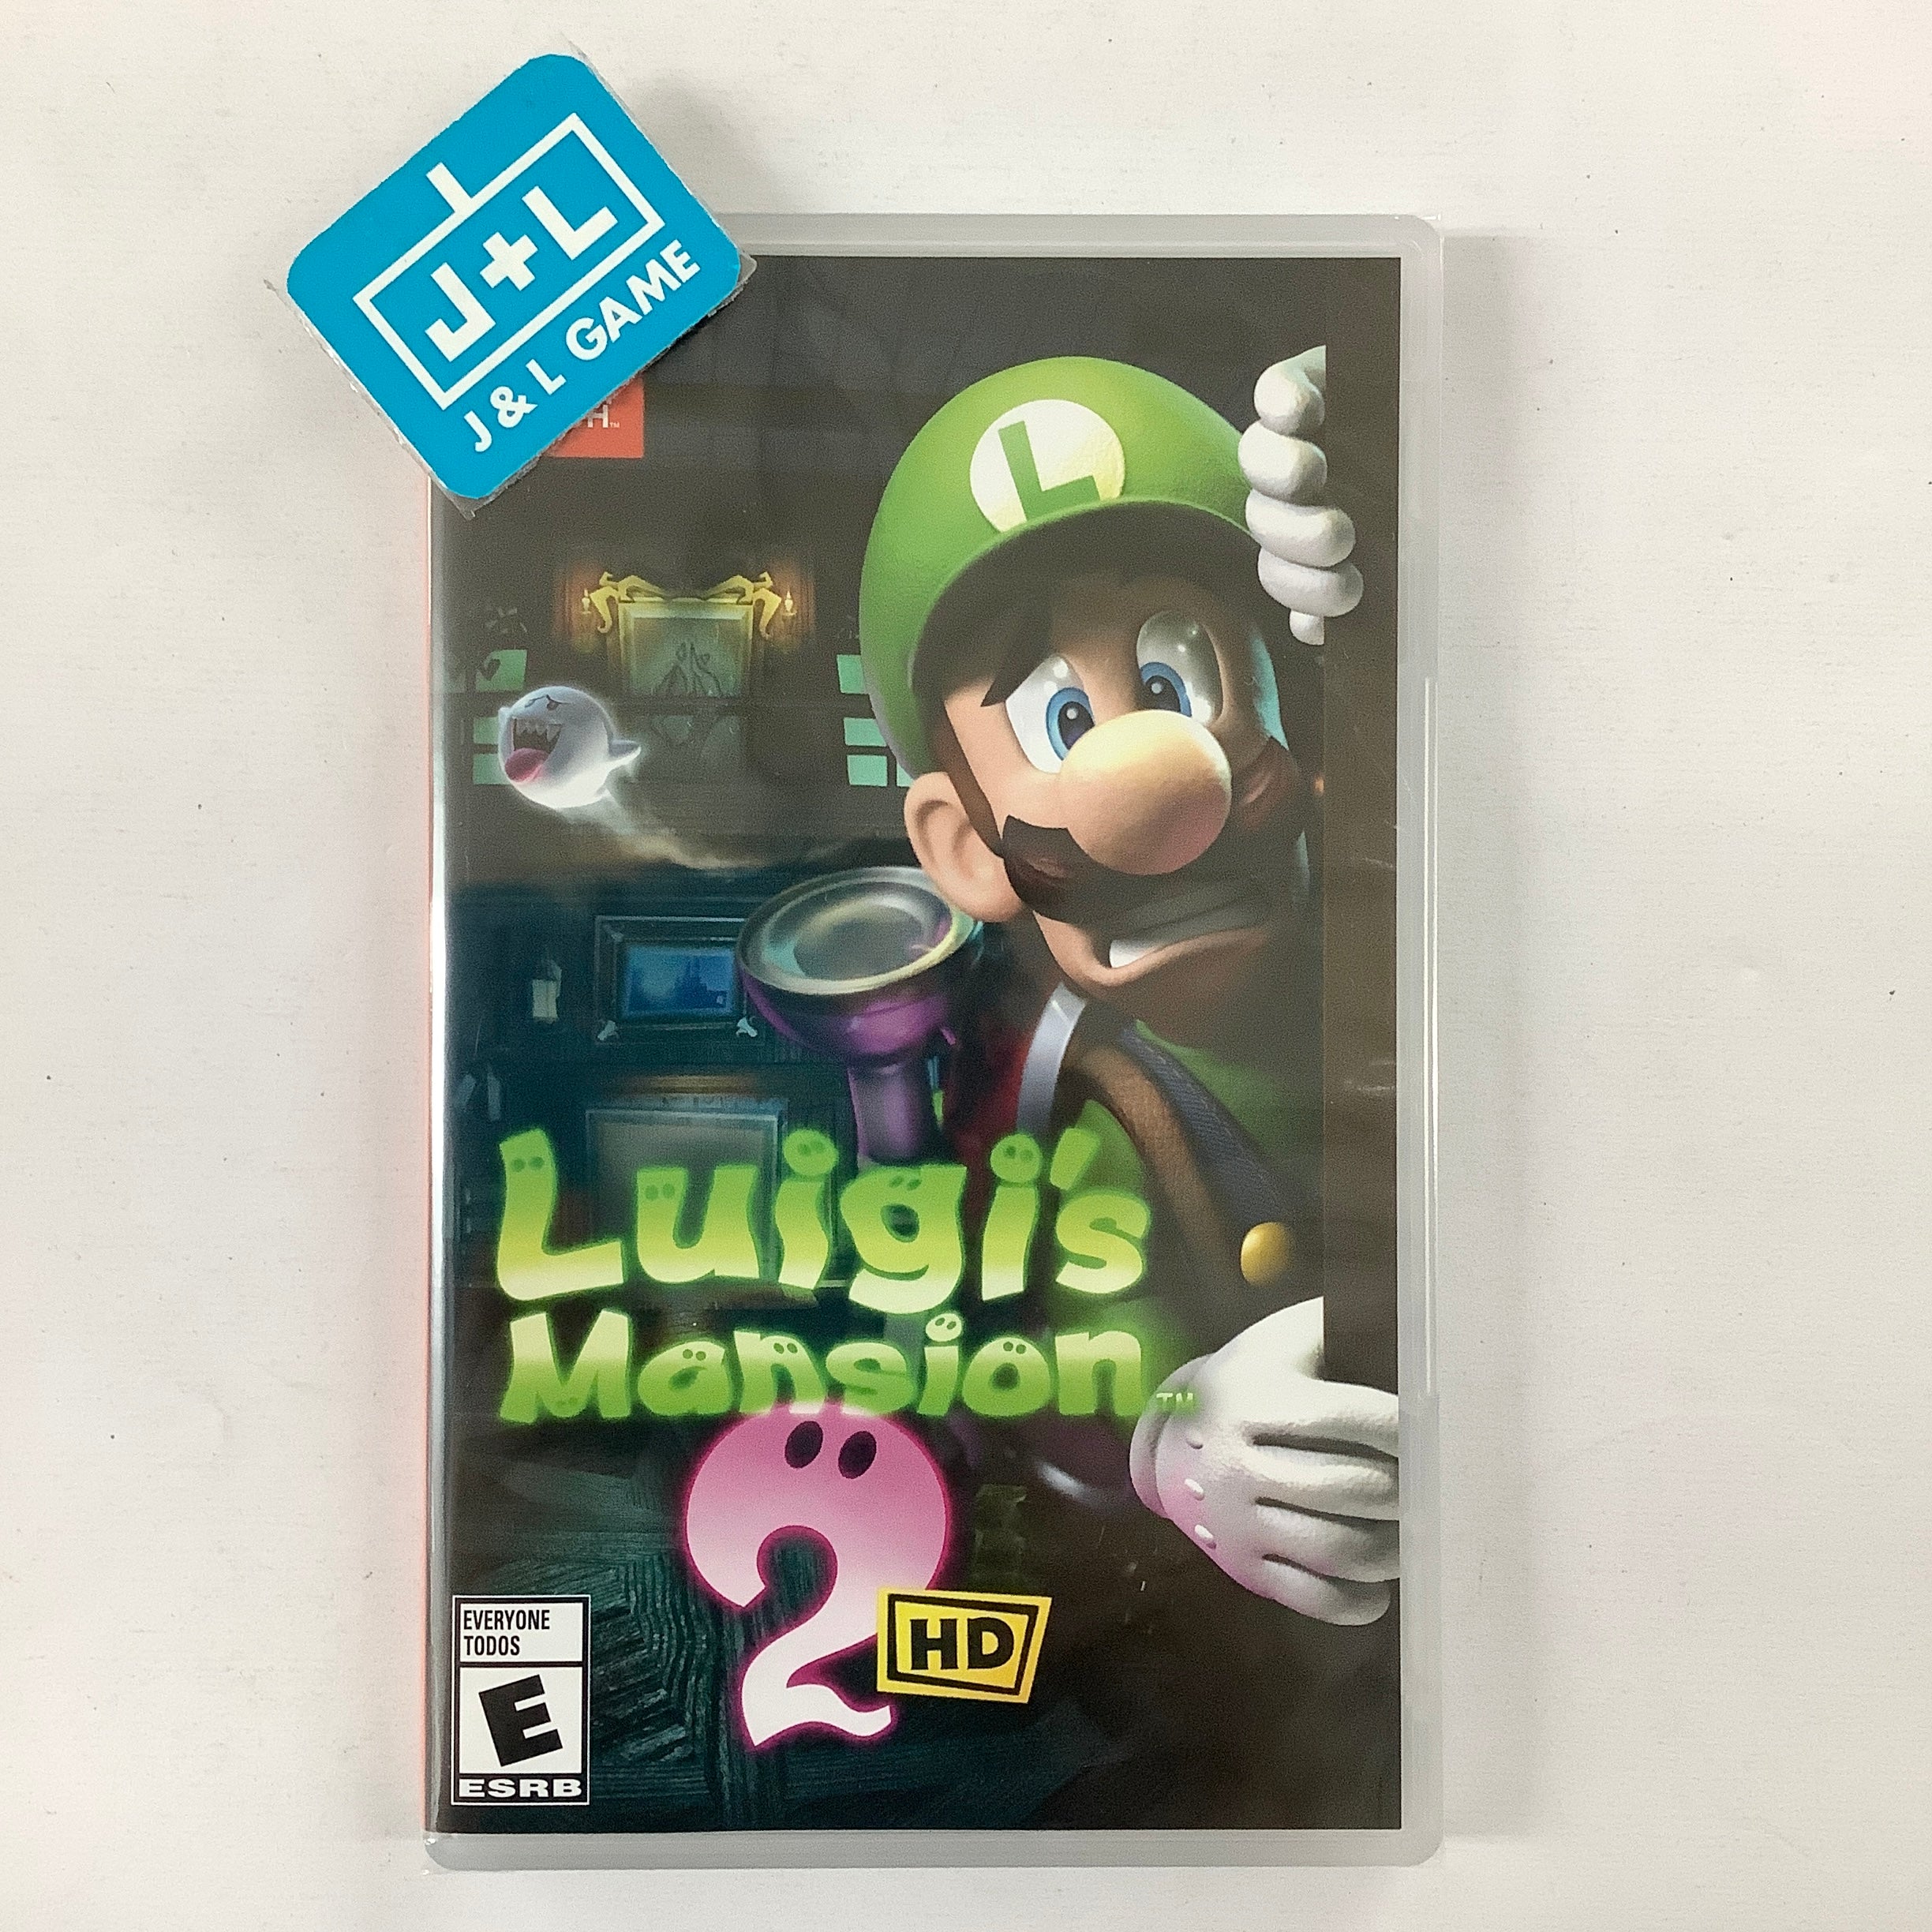 Luigi's Mansion 2 HD - (NSW) Nintendo Switch Video Games Nintendo of America   